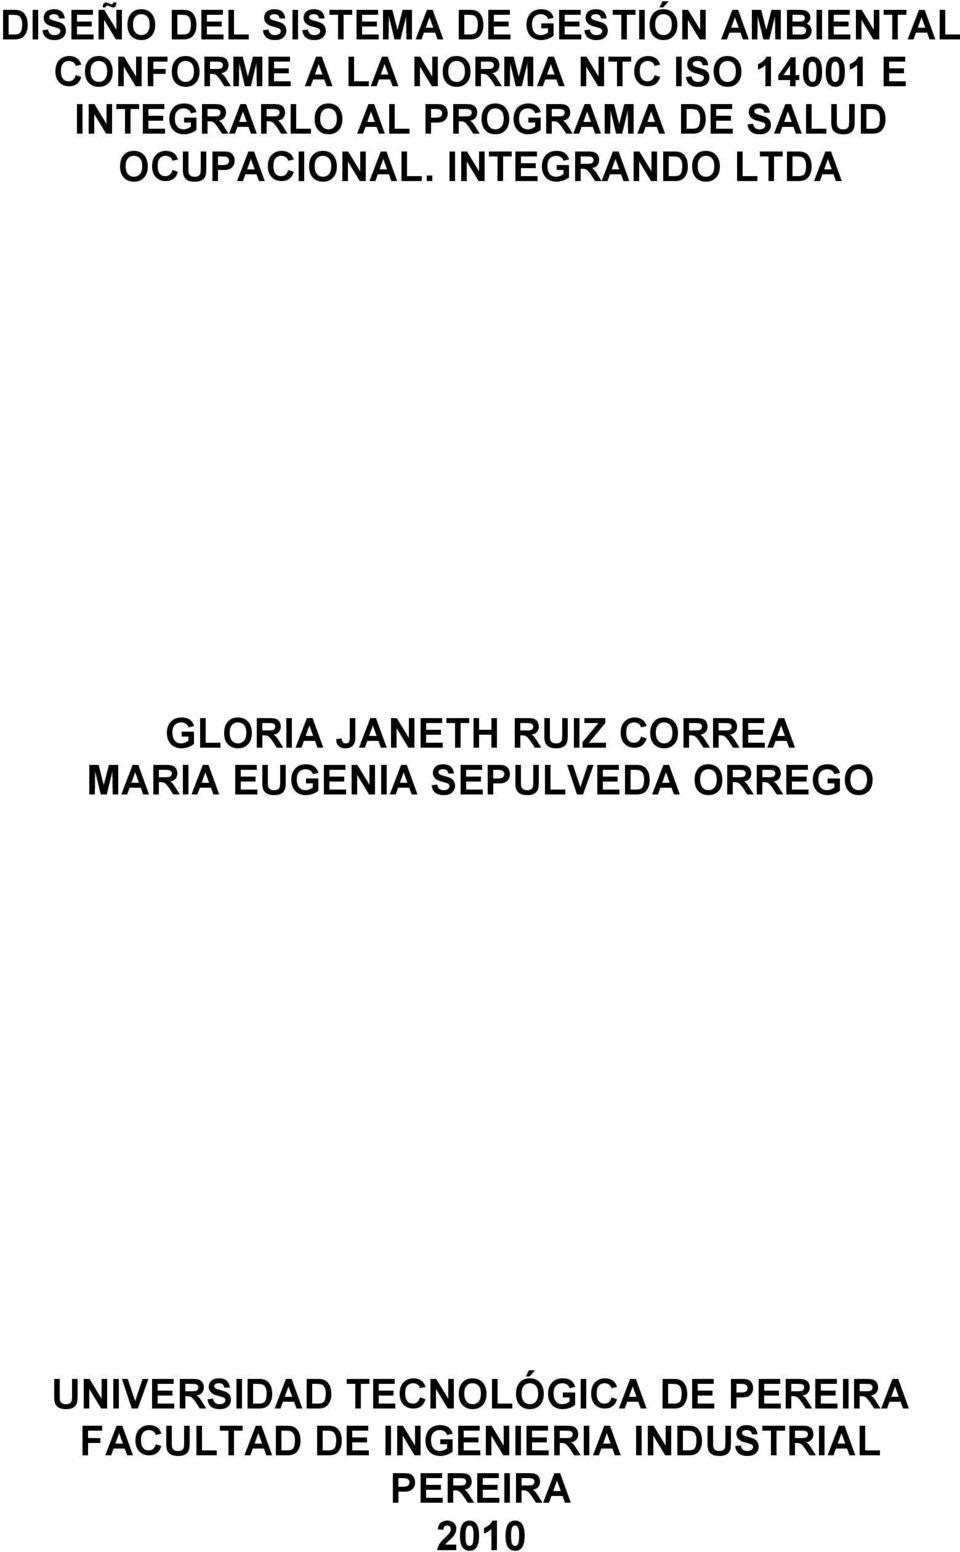 INTEGRANDO LTDA GLORIA JANETH RUIZ CORREA MARIA EUGENIA SEPULVEDA